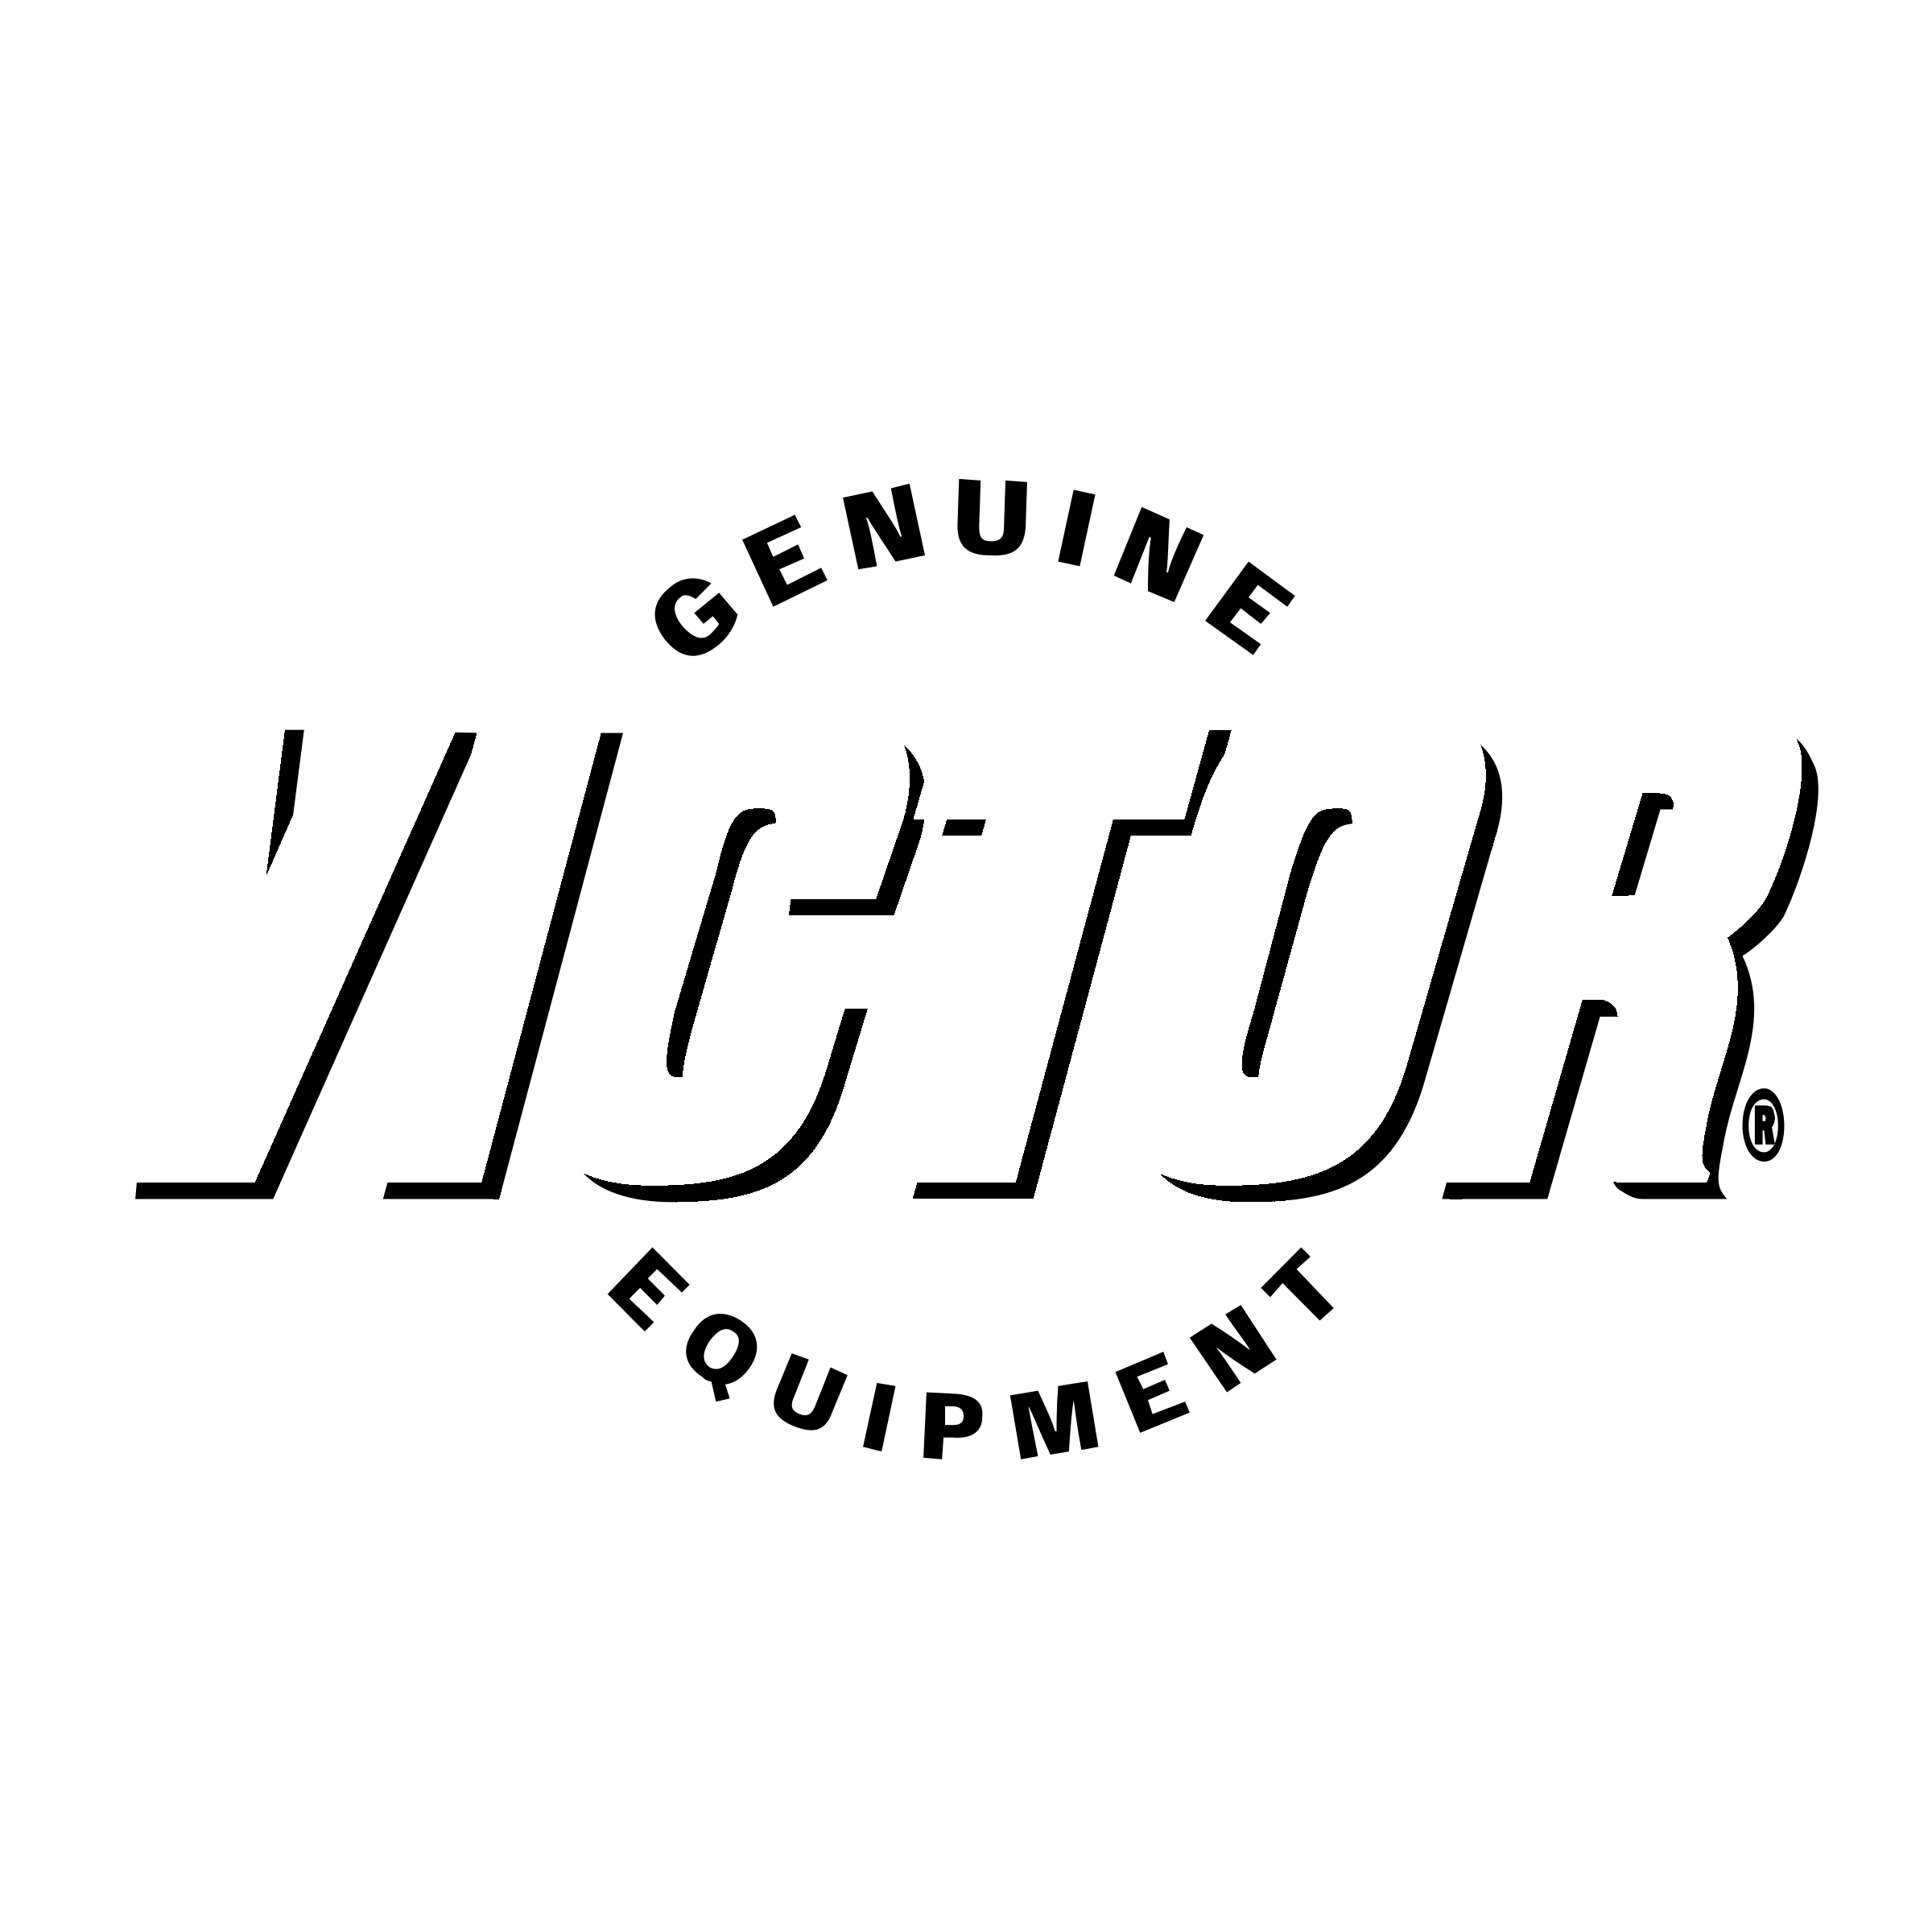 Victor Logo